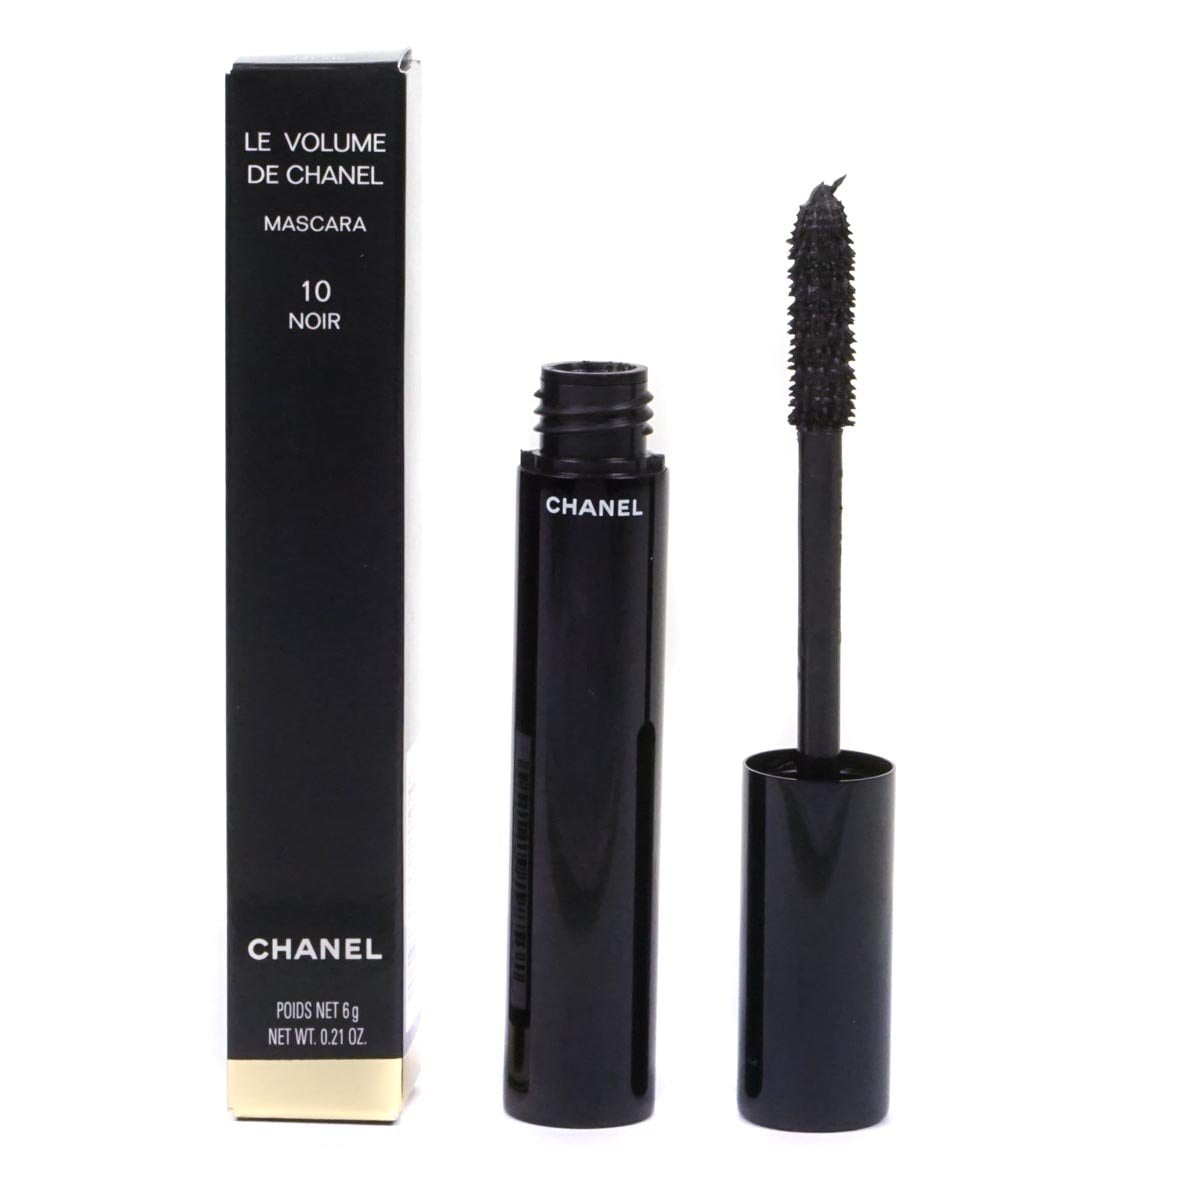 Chanel Le Volume De Chanel 10 noir Waterproof Mascara Authentic New in Box